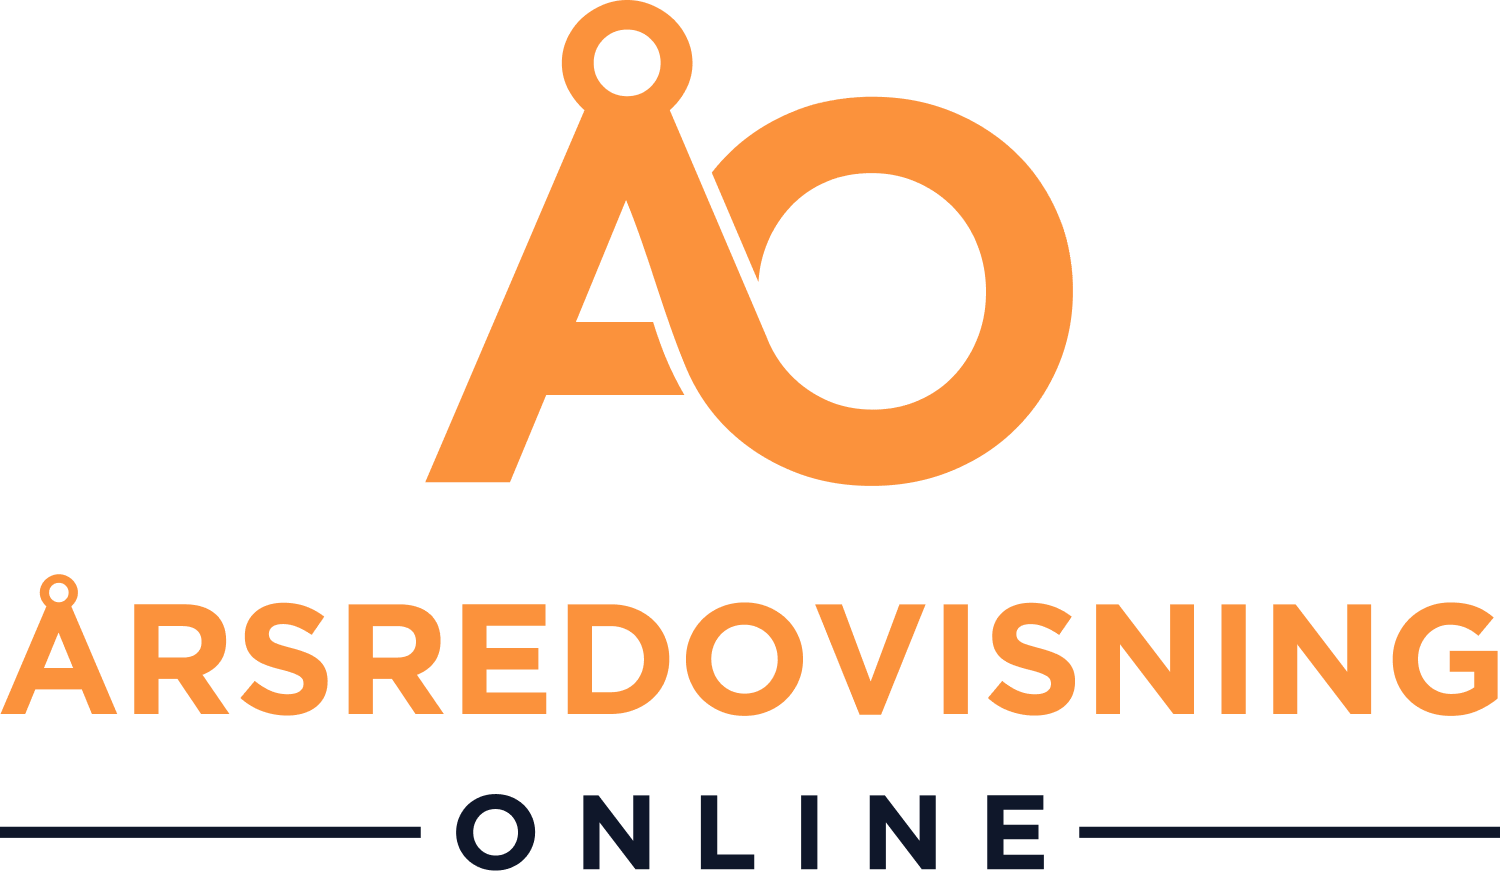 Årsredovisning Online logotype